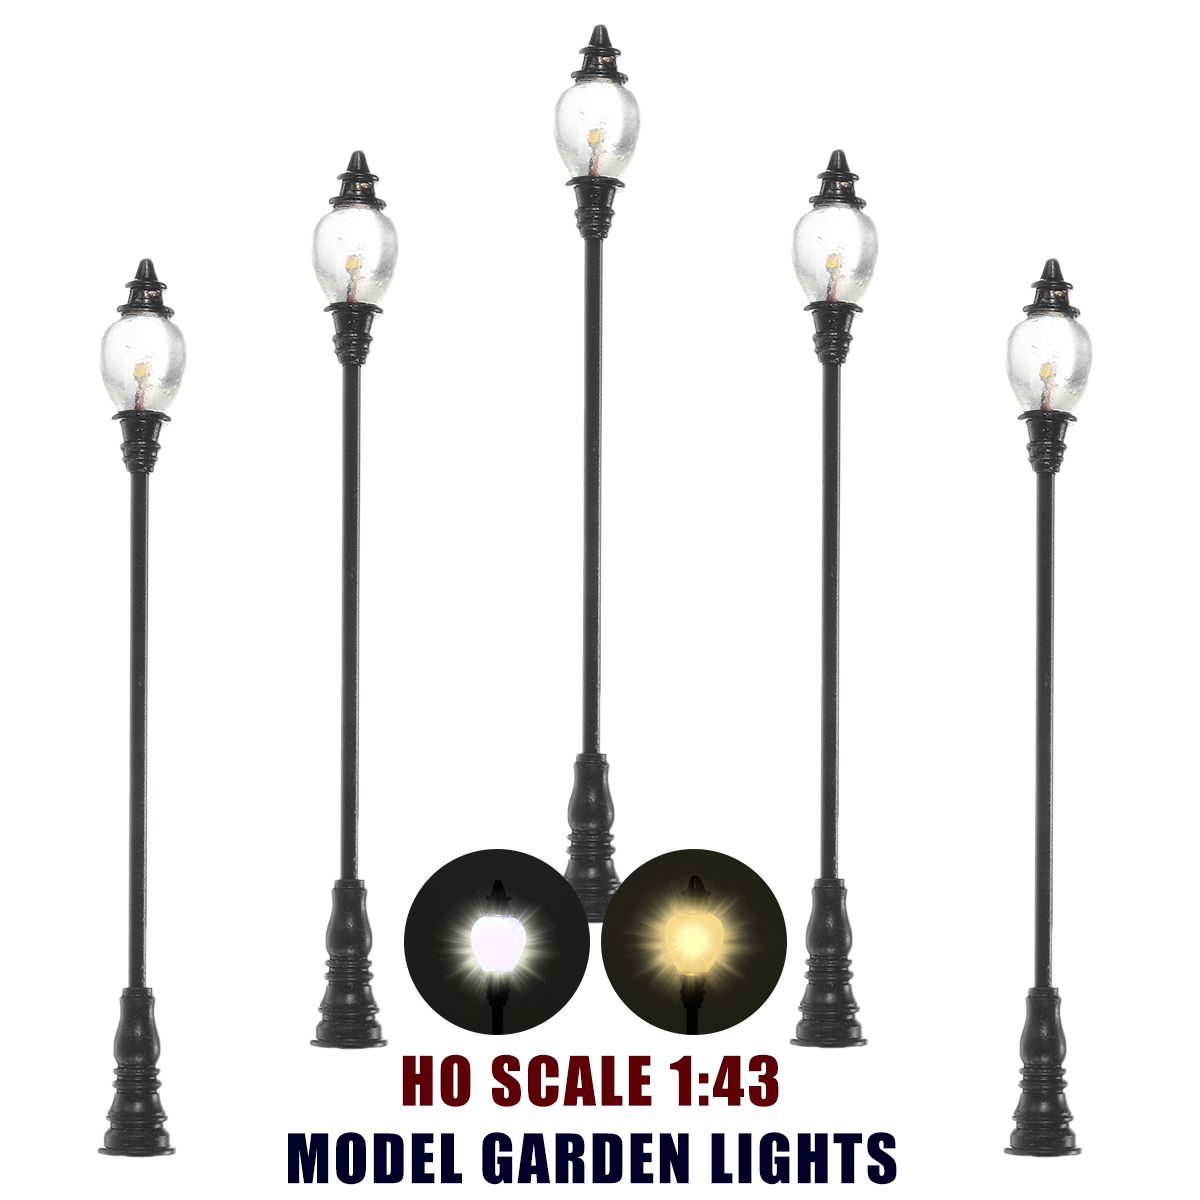 10Pcs-Scale-143-Model-Garden-Light-WarmWhite-Street-Antique-Light-Train-Lamp-1670453